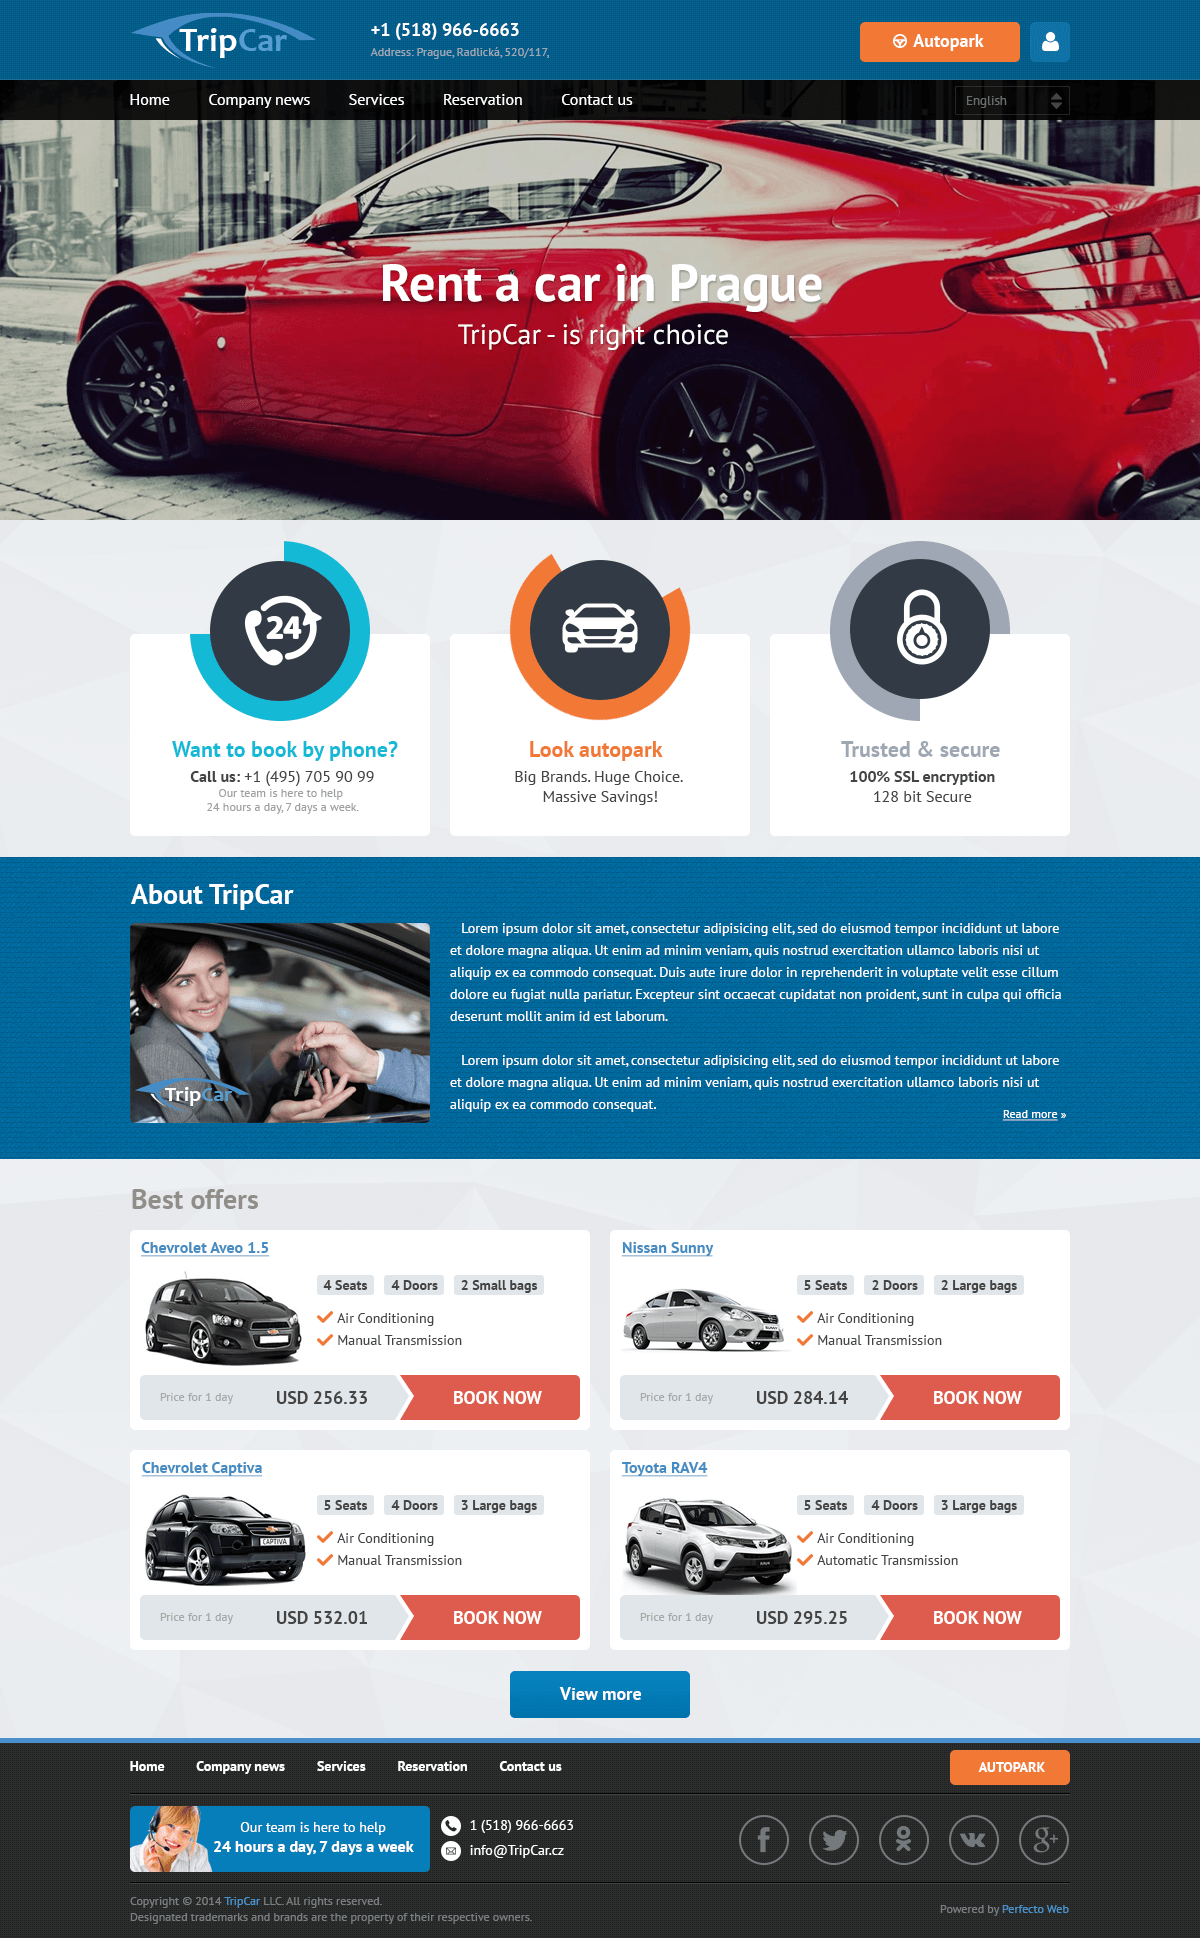 TripCar - Rent a car in Prague №1- Home page